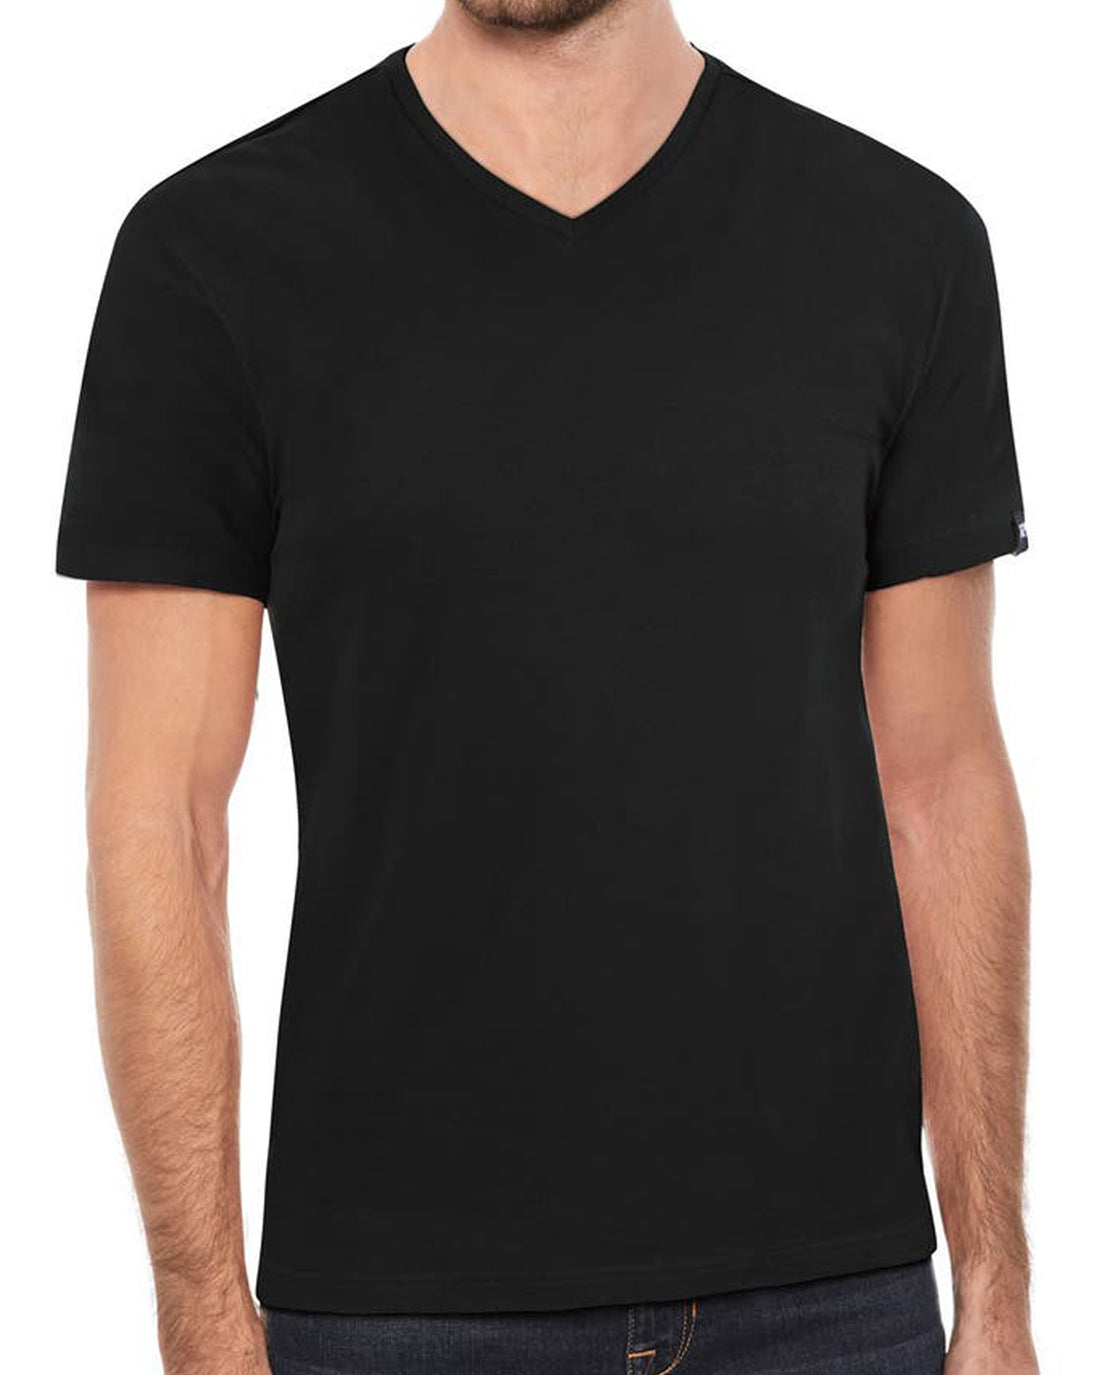 V-Neck Hemp T-Shirts - Plain Cotton/Hemp Bland Tee - Hemptique